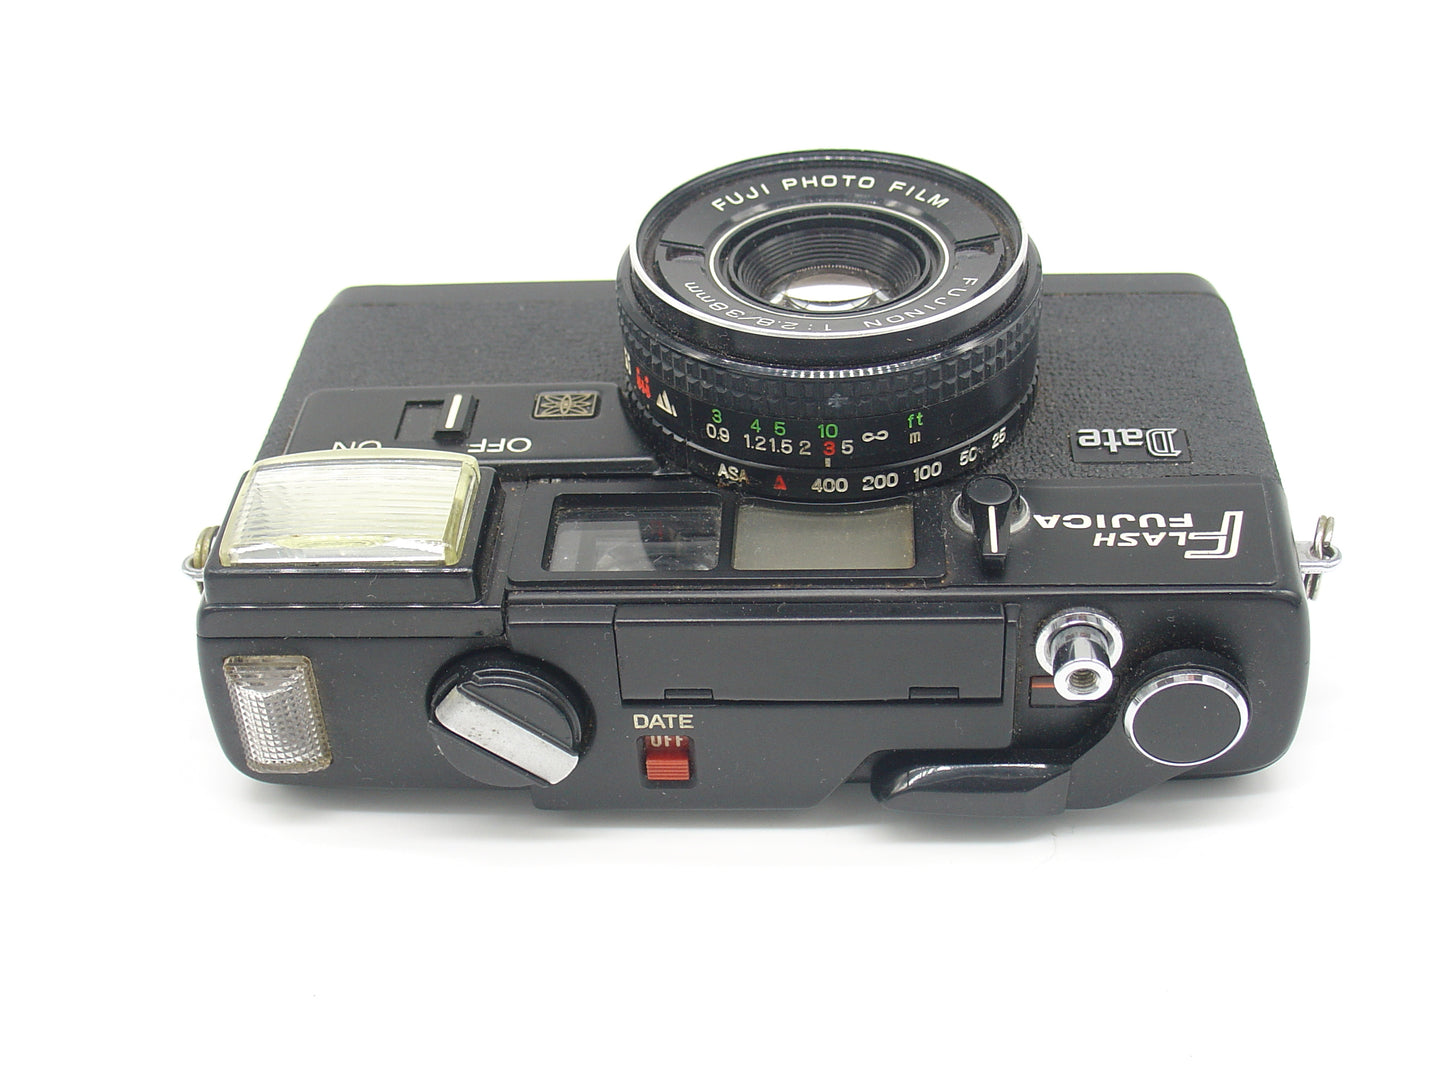 Flash Fujica compact film camera with user manual